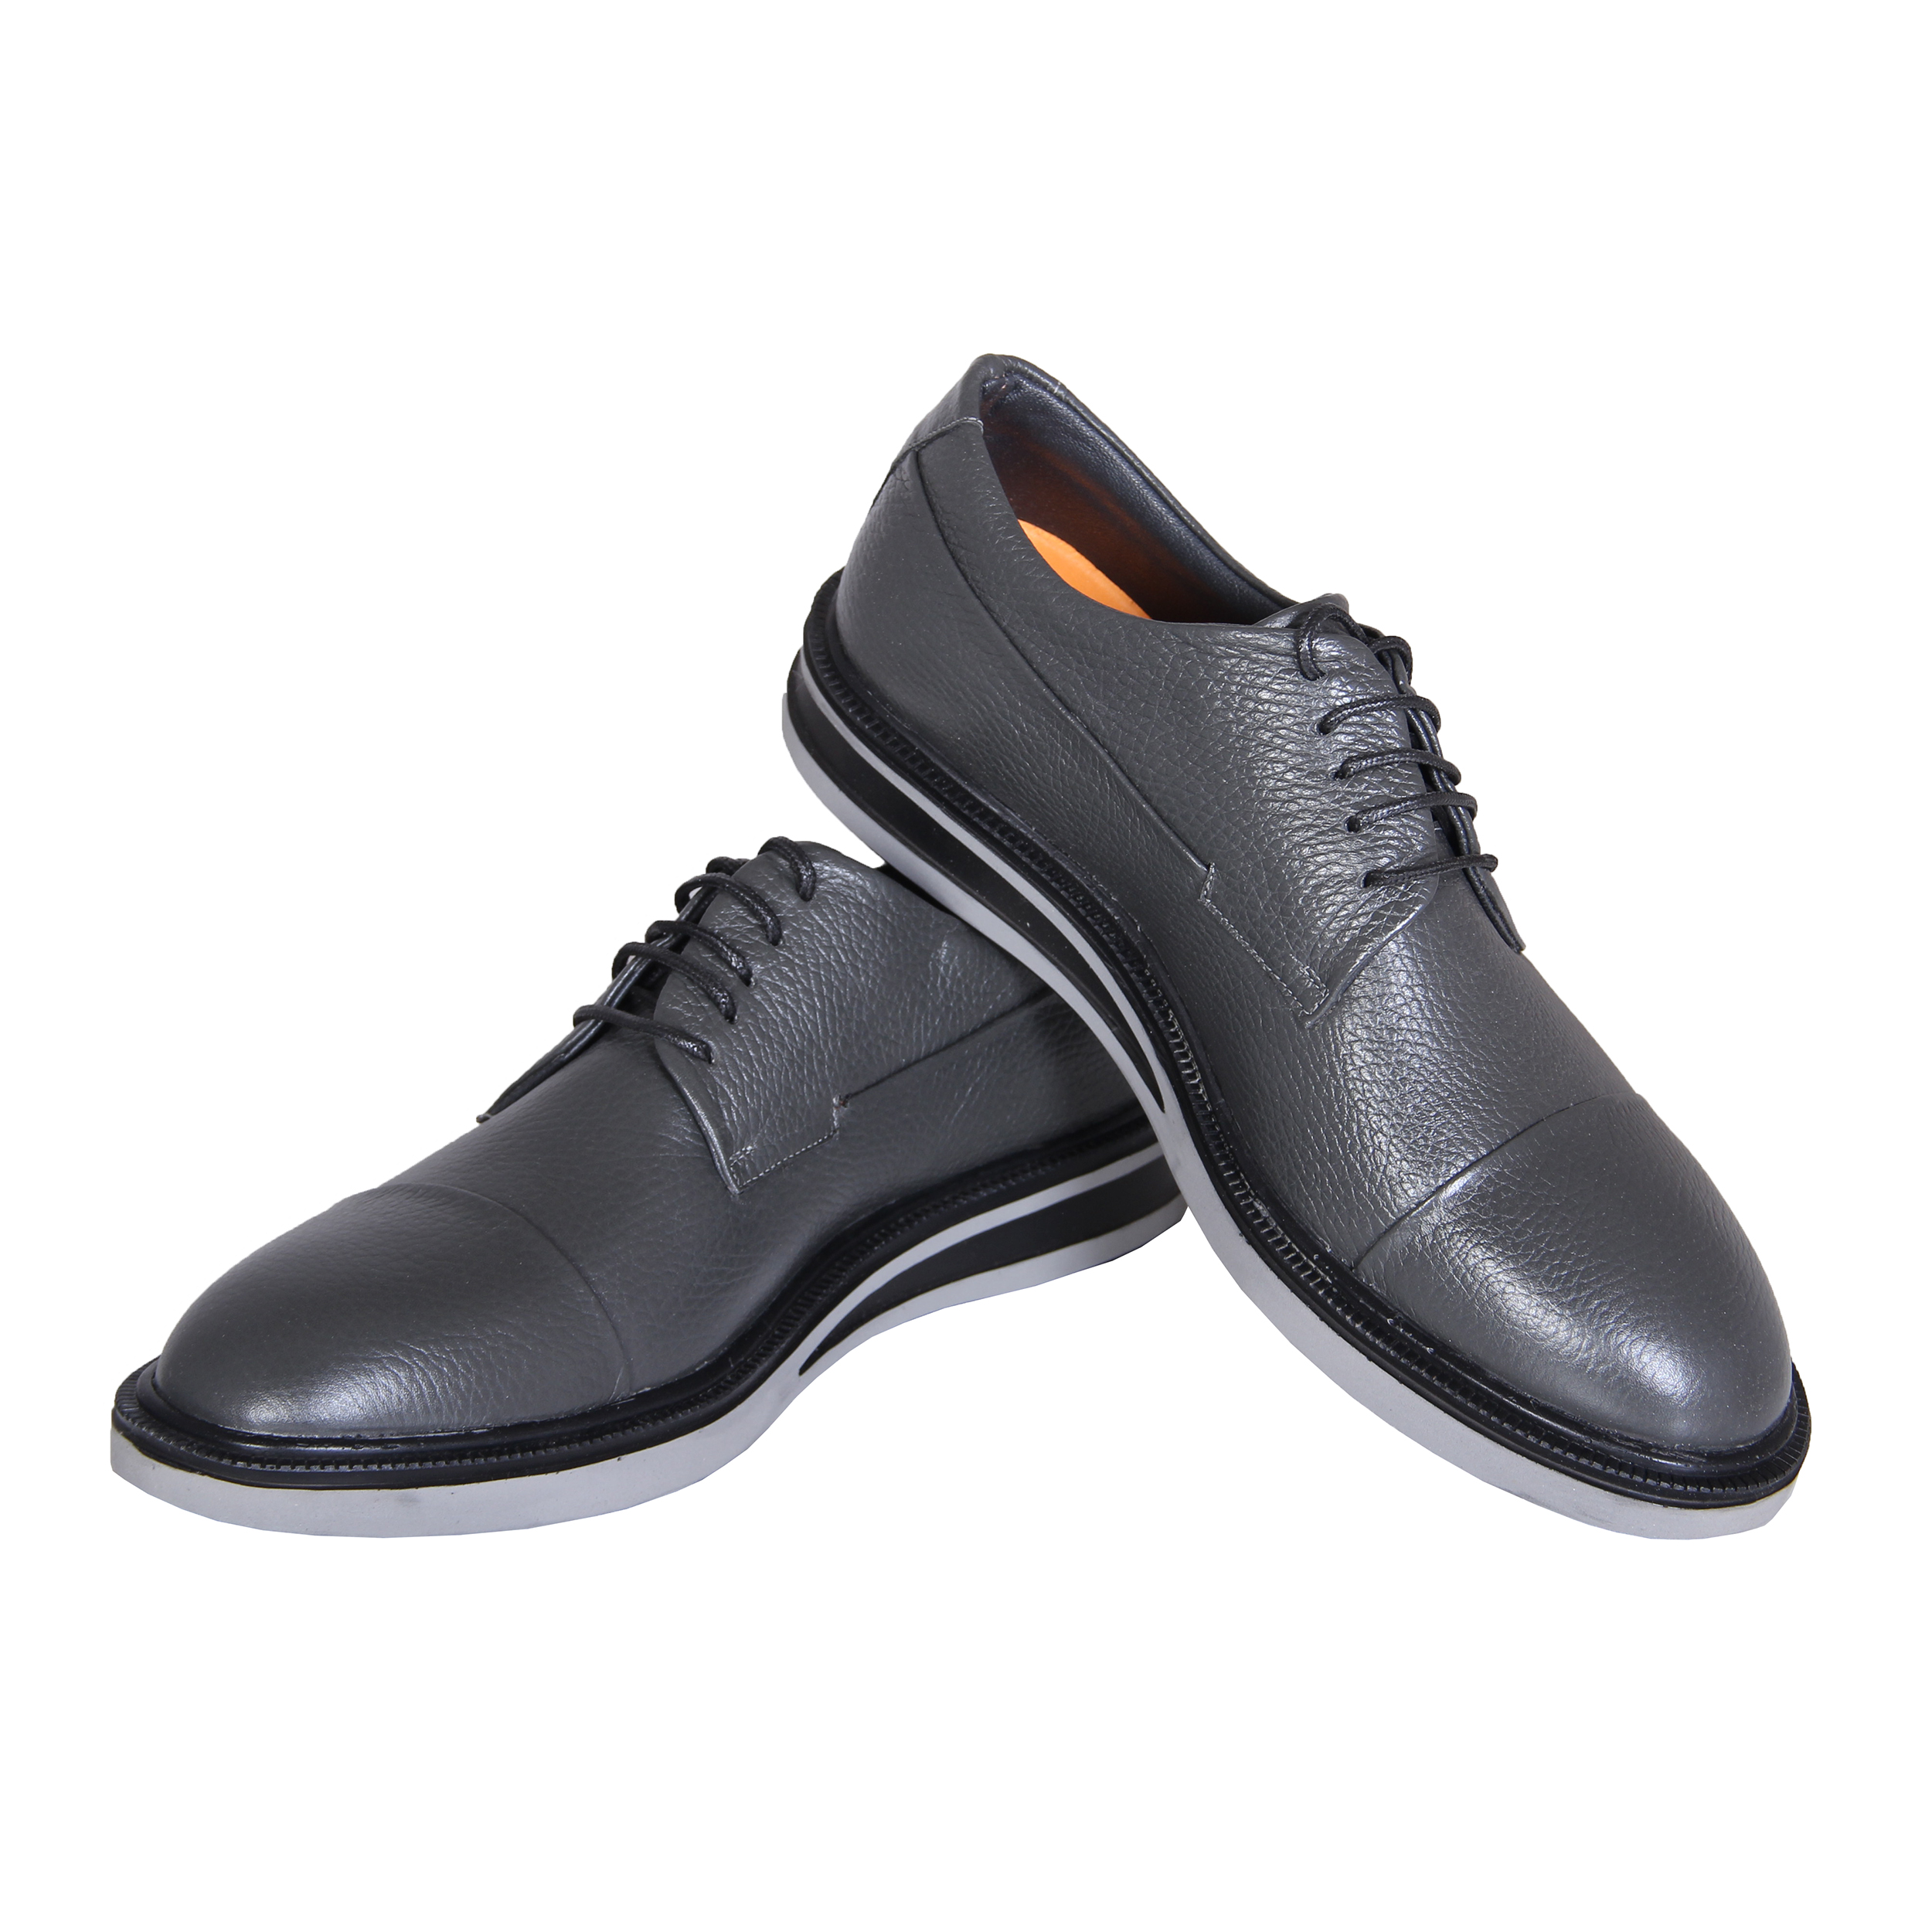 SHAHRECHARM leather men's casual shoes , GH1092-21 Model